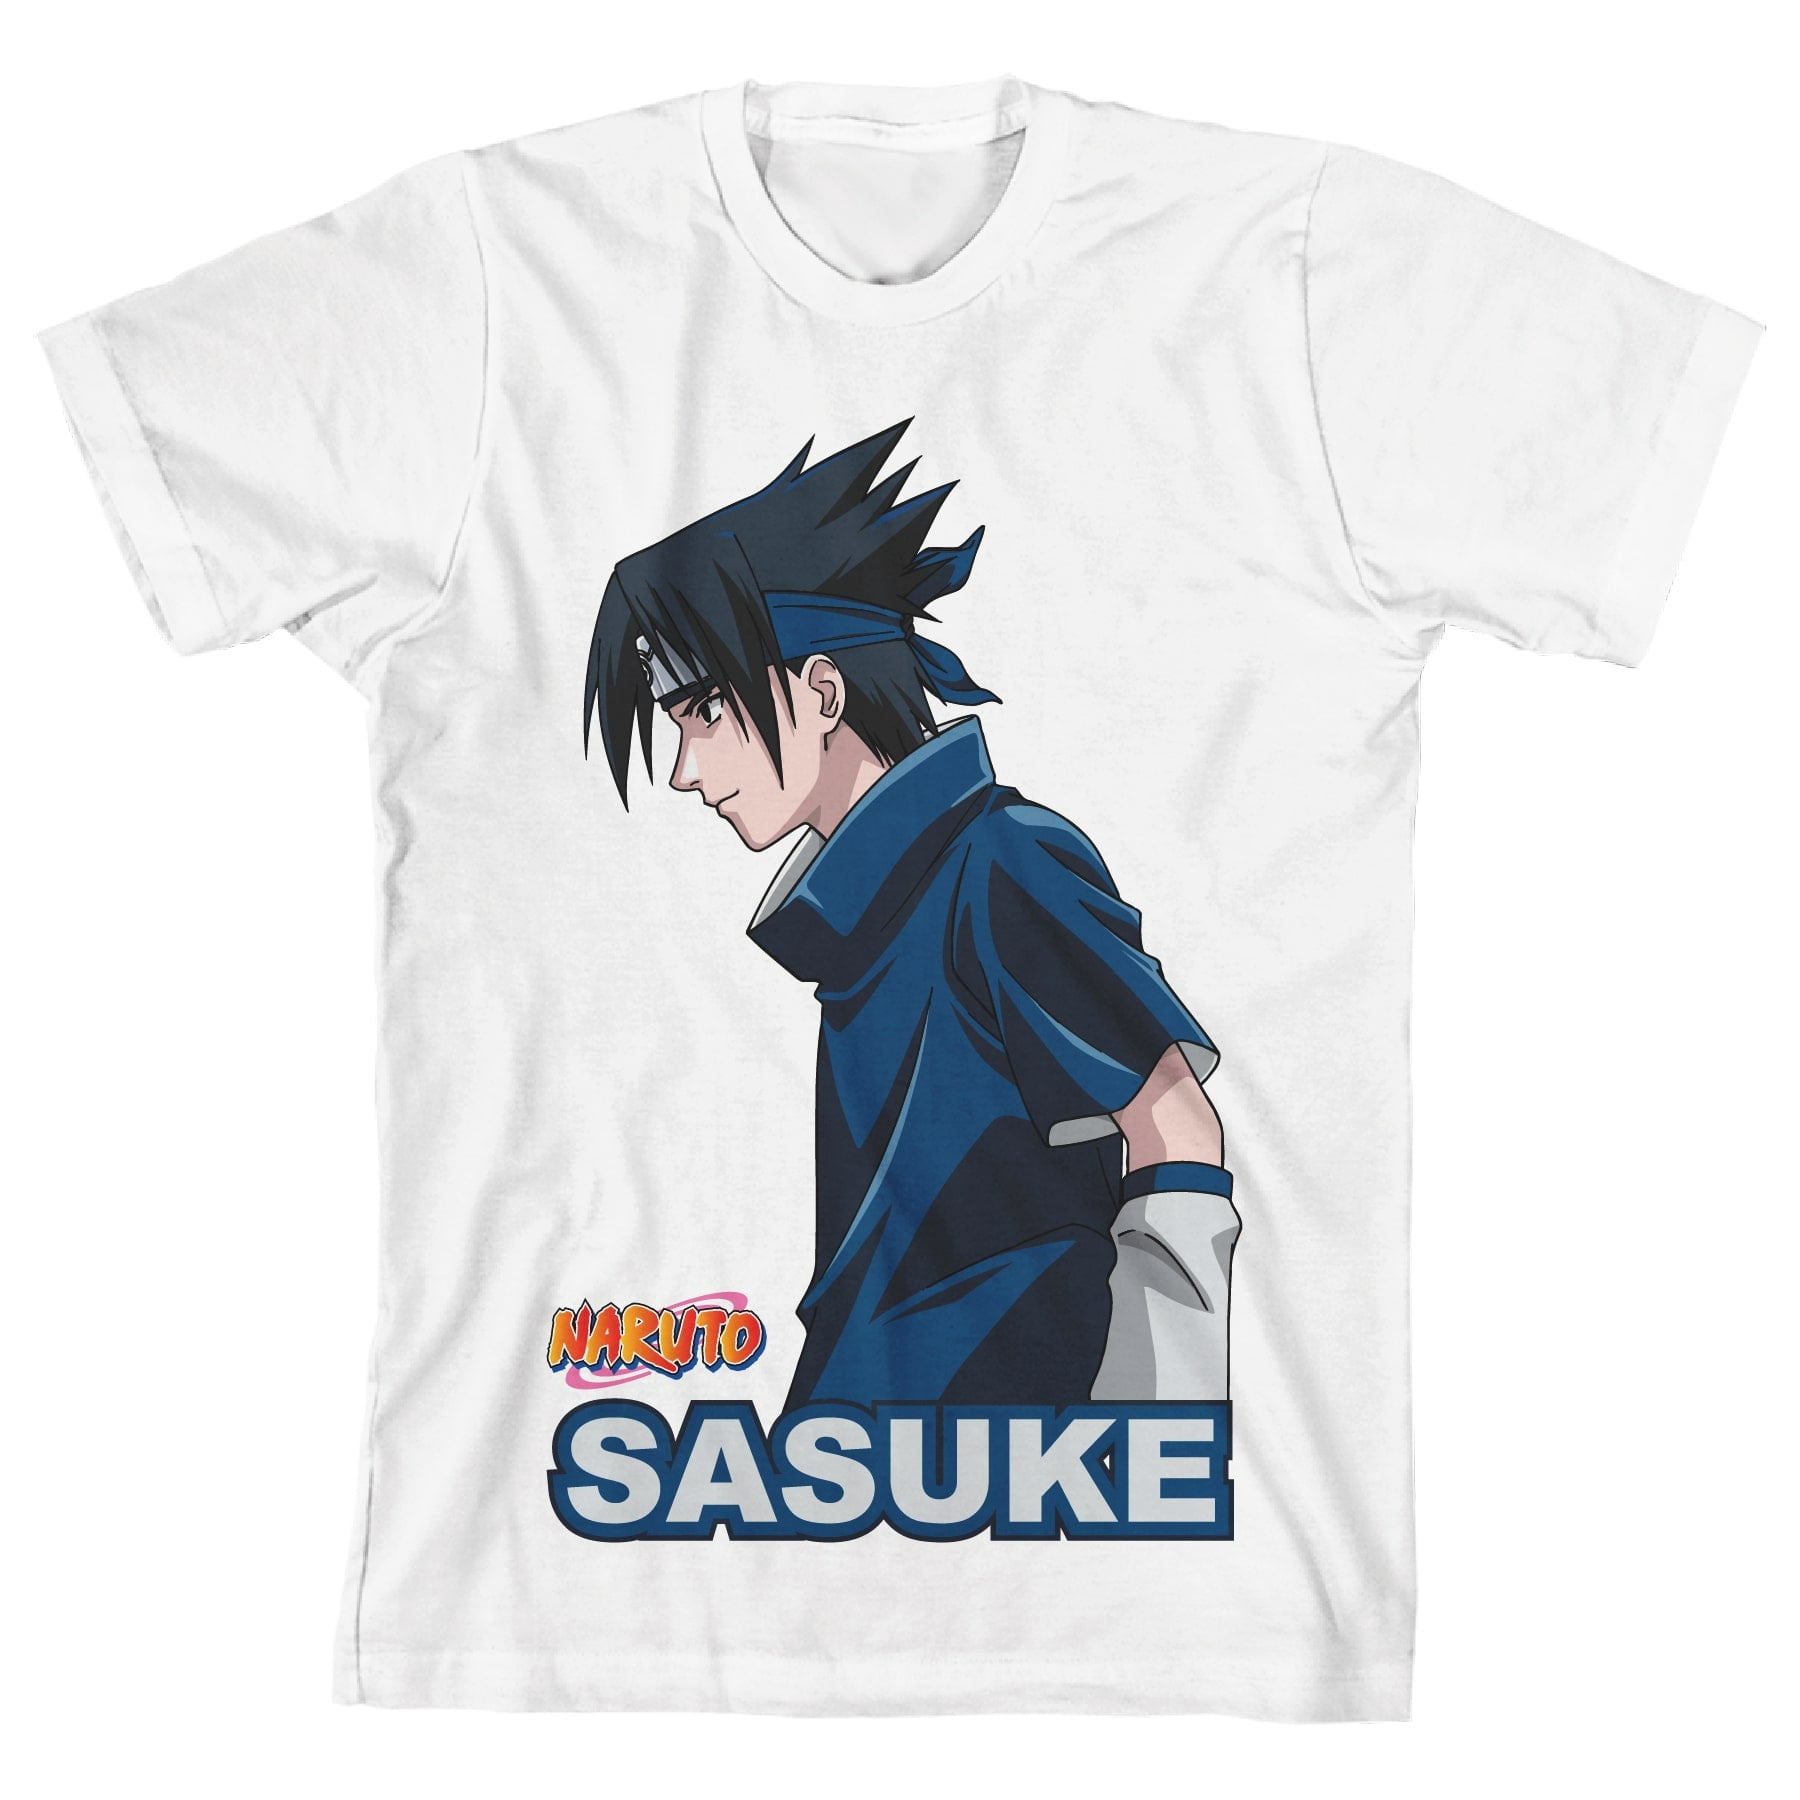 Naruto Classic Sasuke Side View Boy's White T-shirt-Large